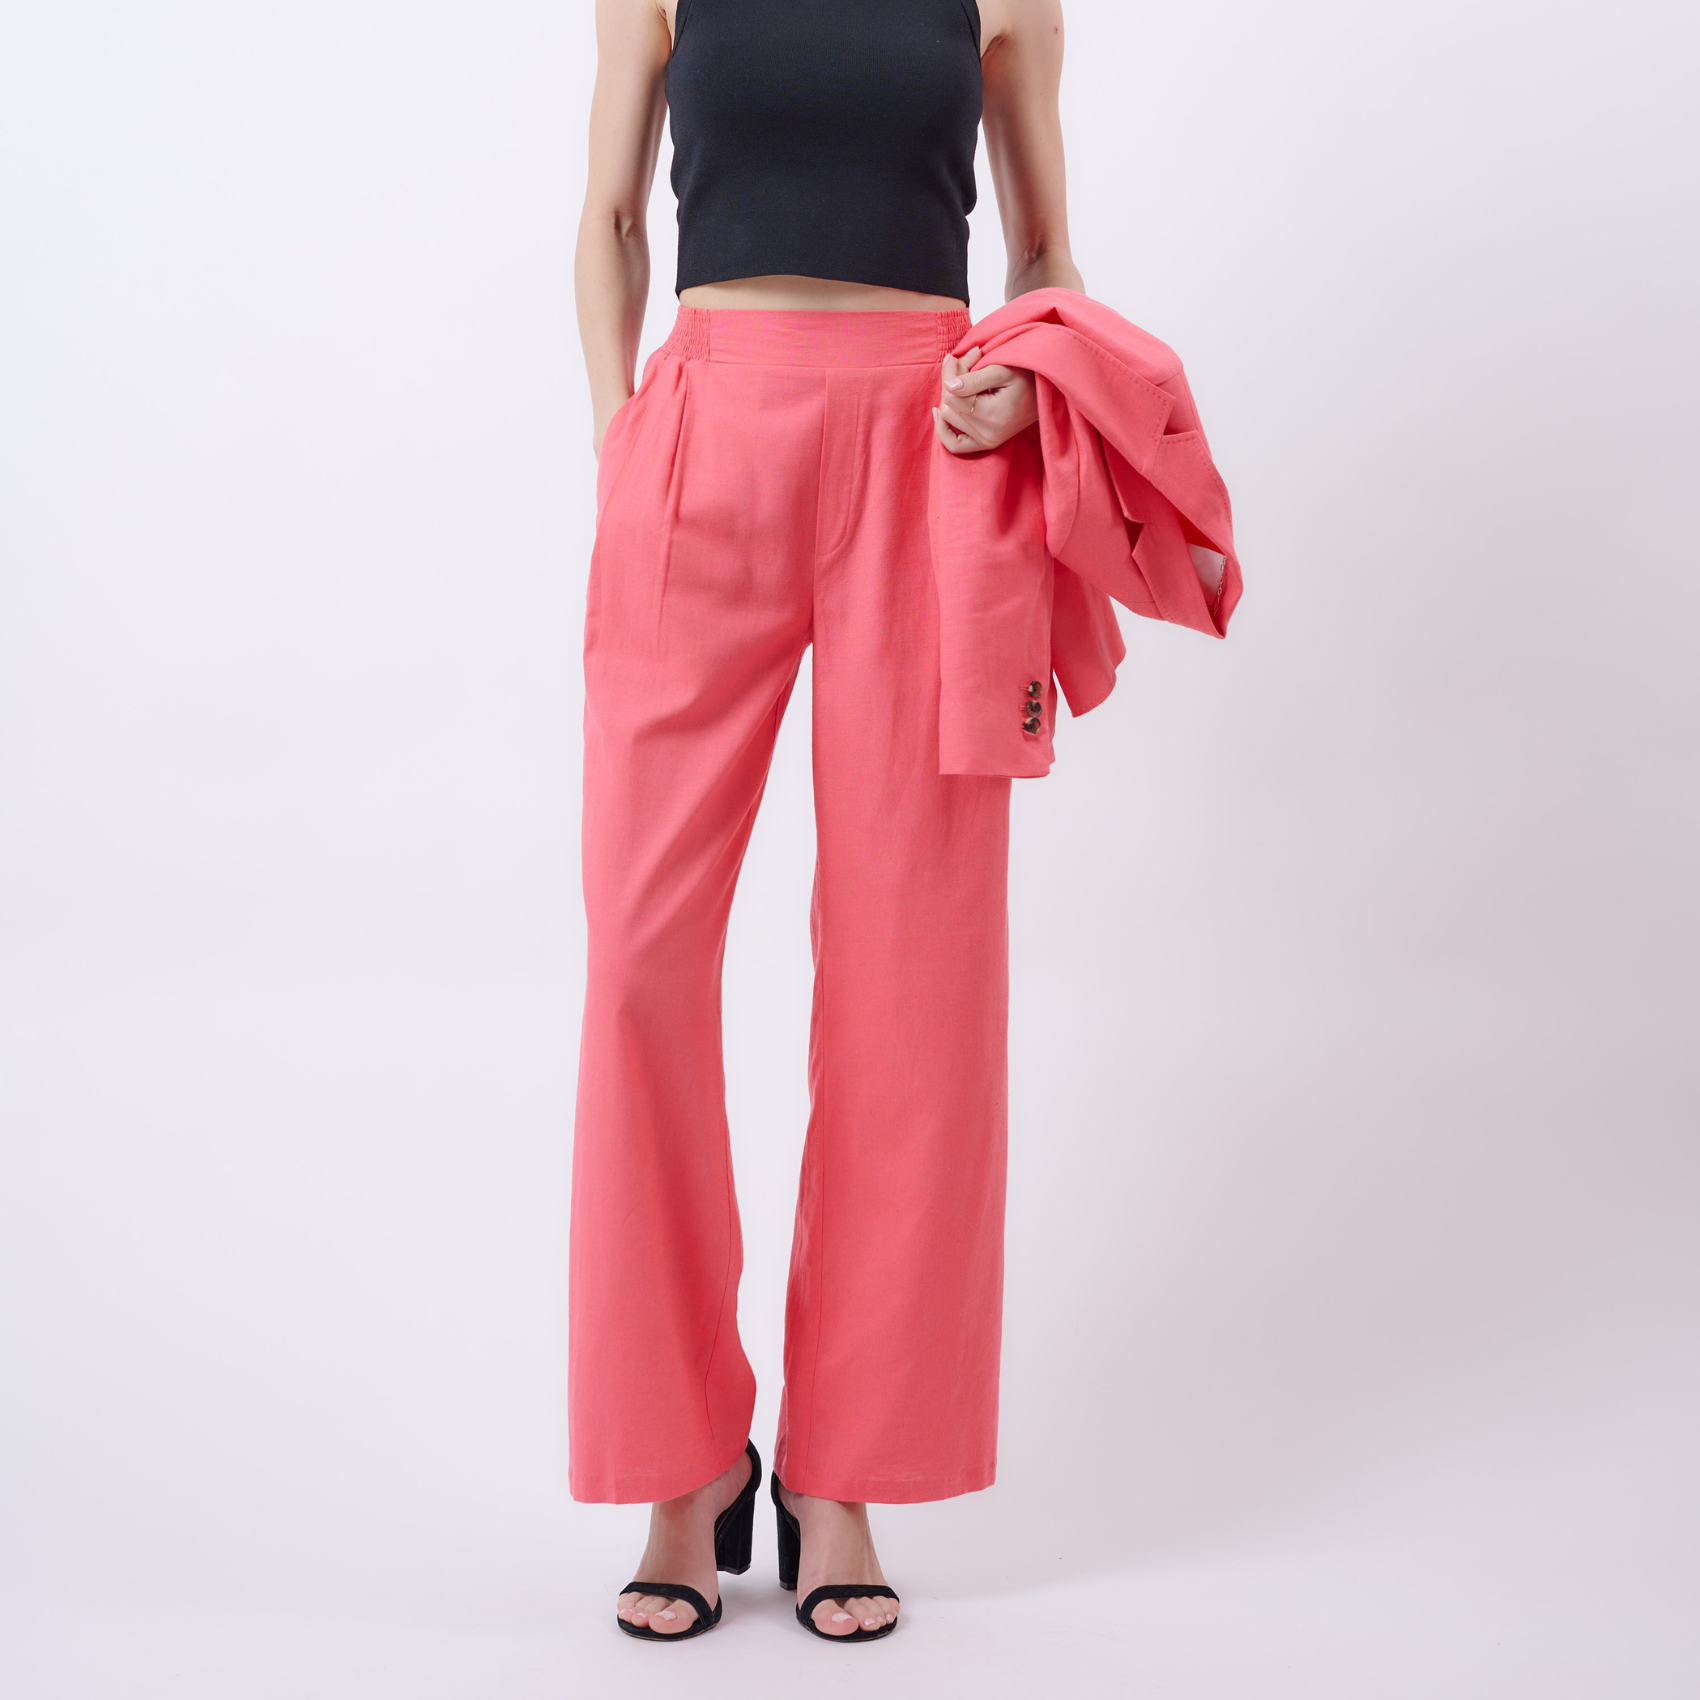 Stylish NOAH Linen Pants in Light Carmine Pink